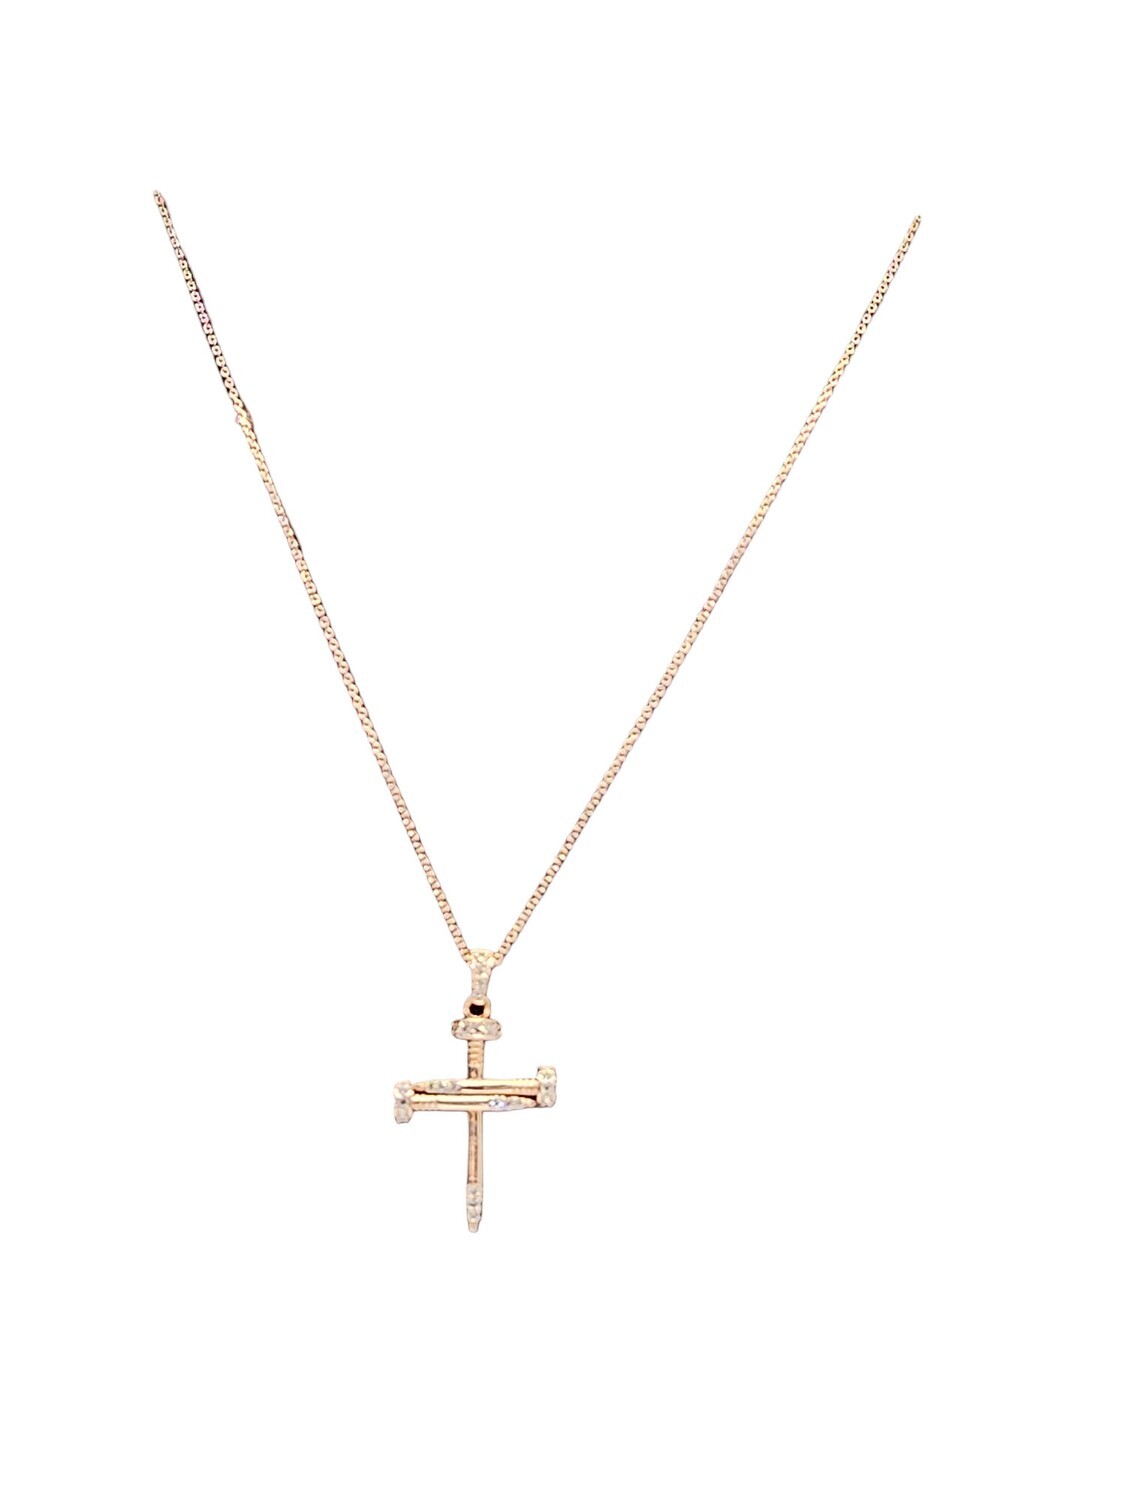 Nail Cross Pendant & Necklace Set - 14k Rose Gold & Natural Diamonds - 20" Long